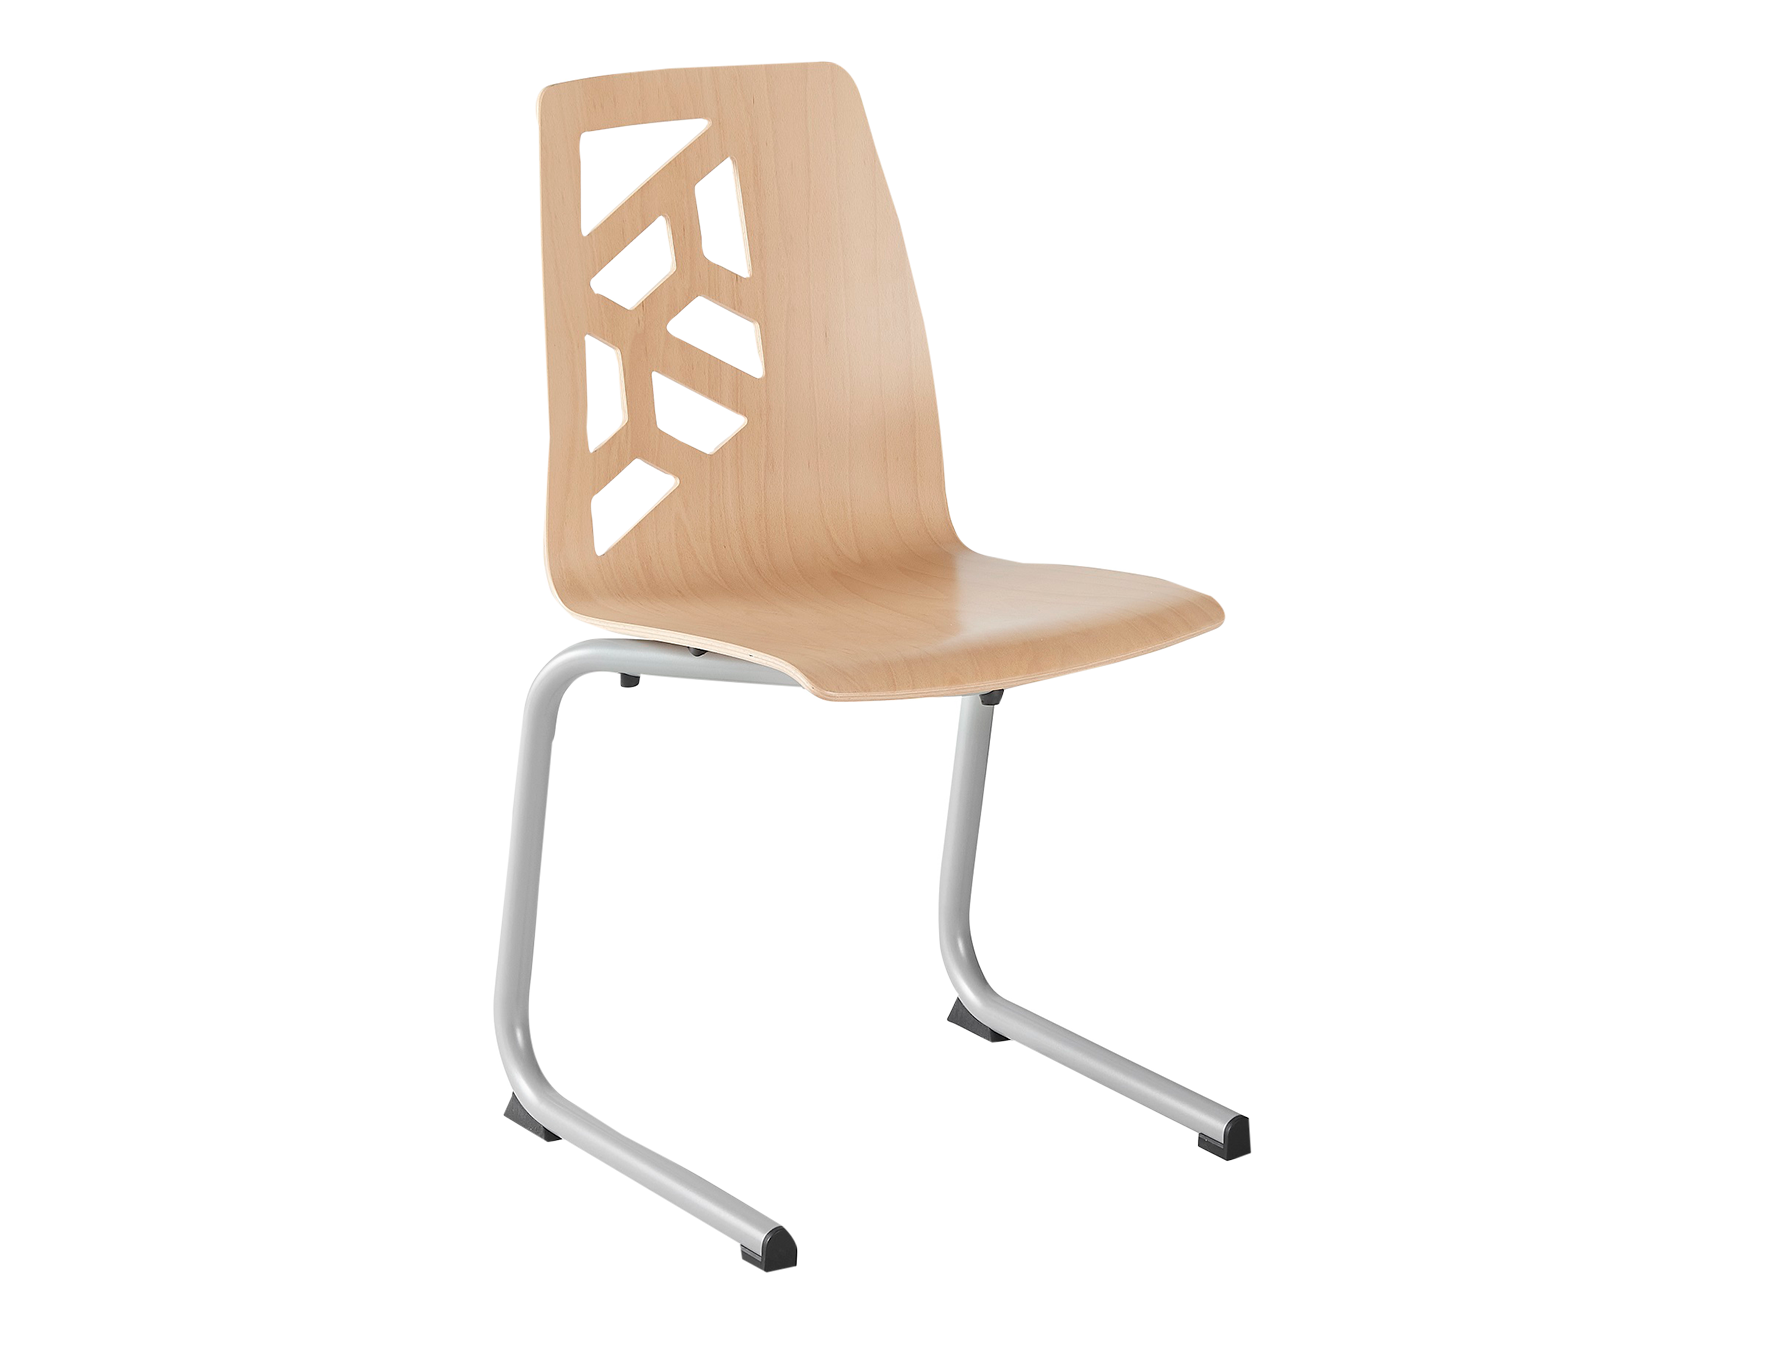 Chaise IDAHO 3 appui sur table - piétement aluminium
Taille 6